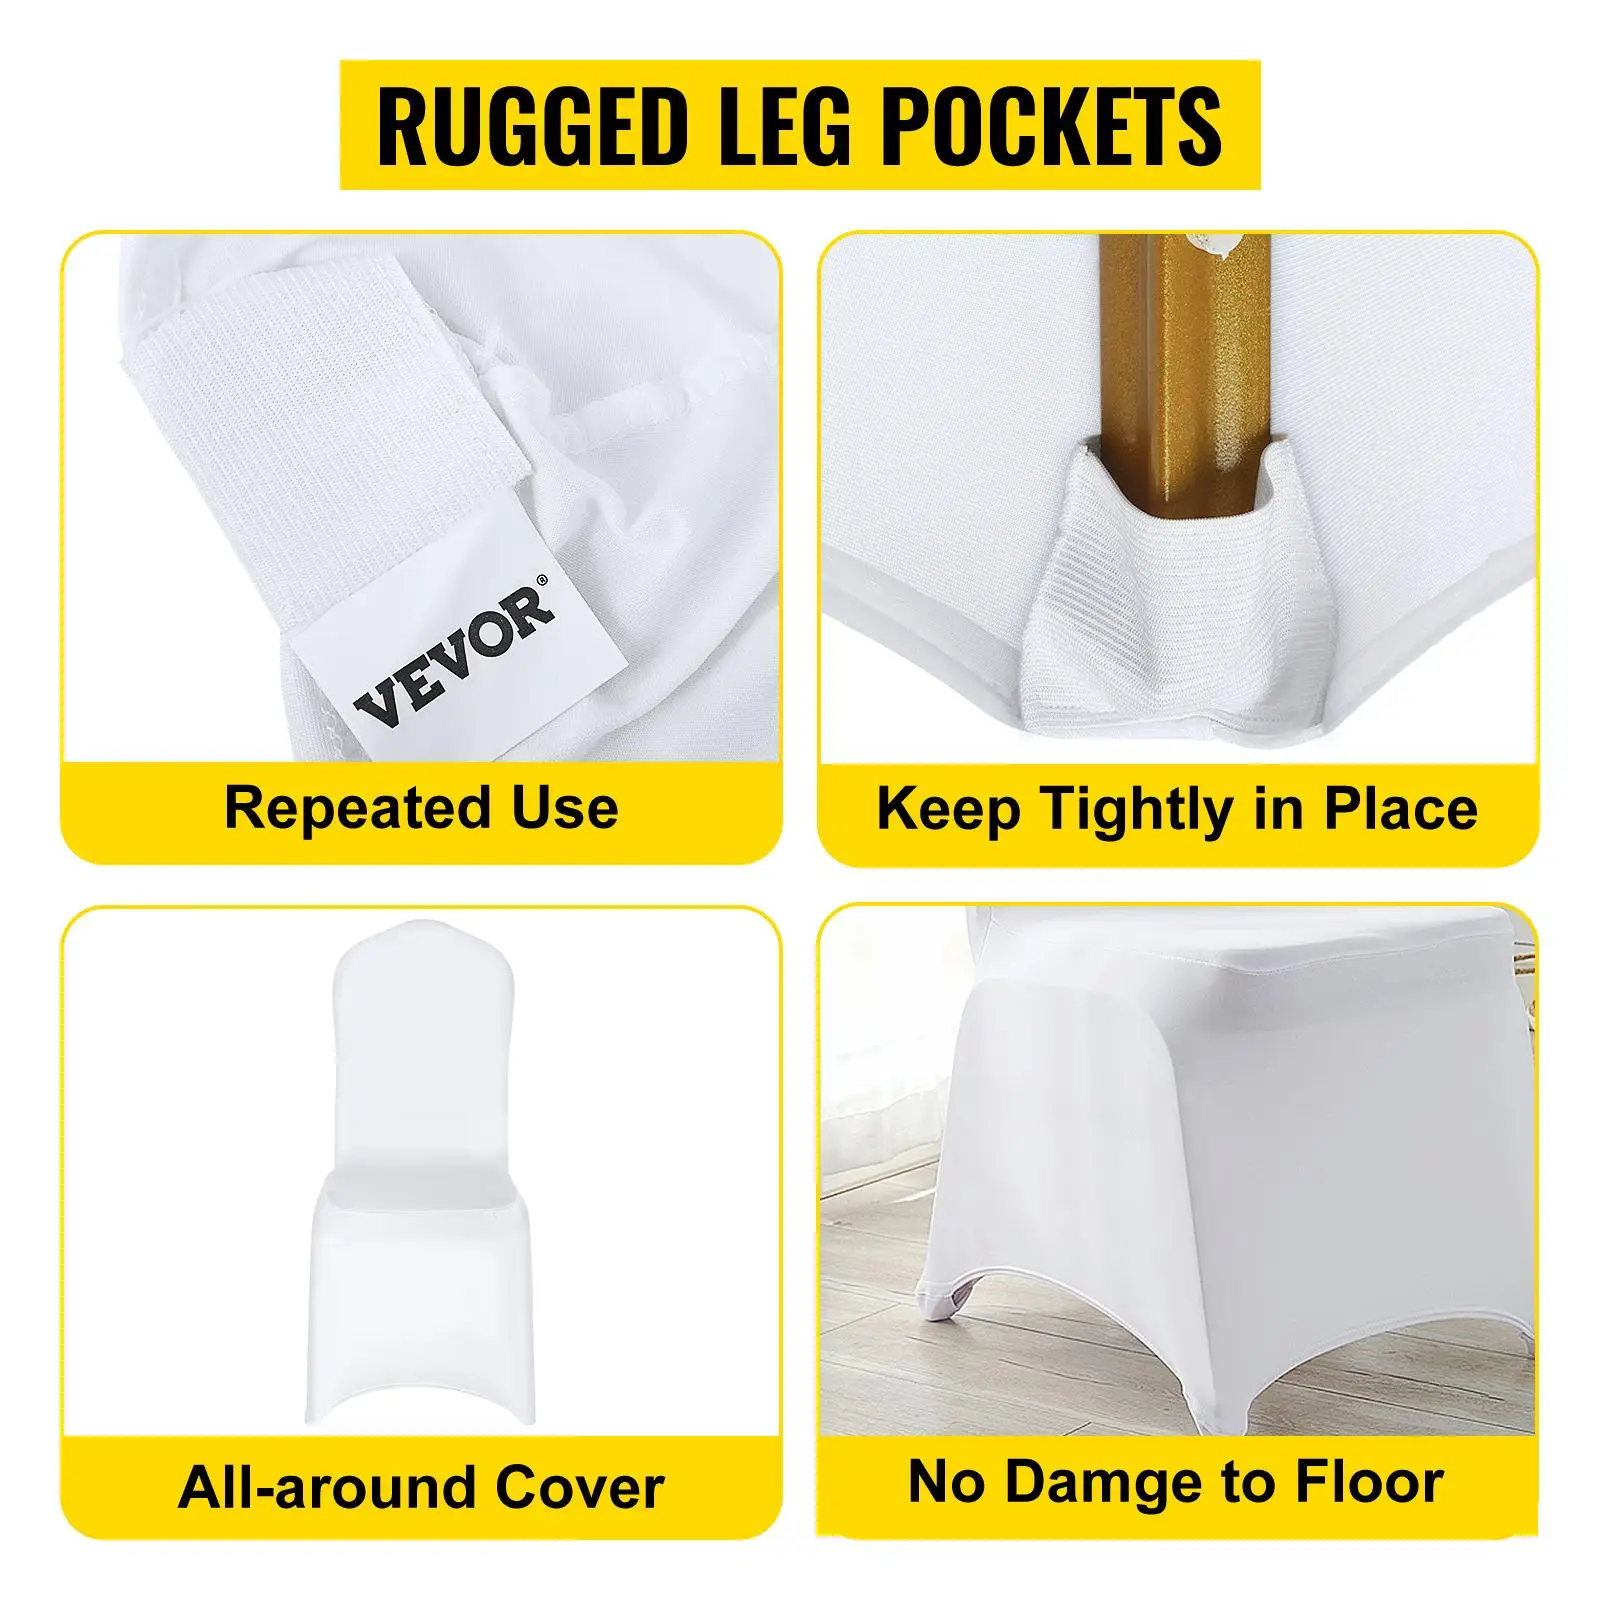 Rugged leg pockets